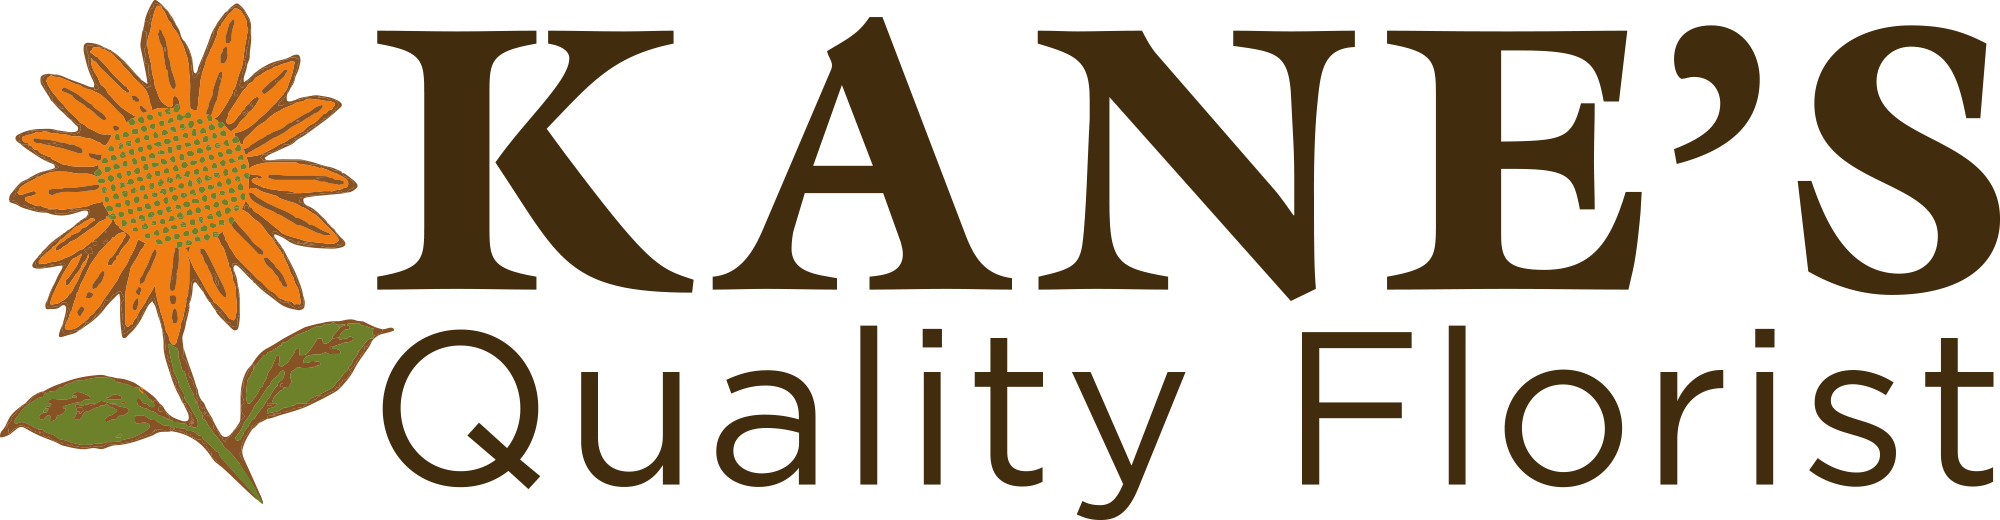 Kane's Quality Florist - Logo